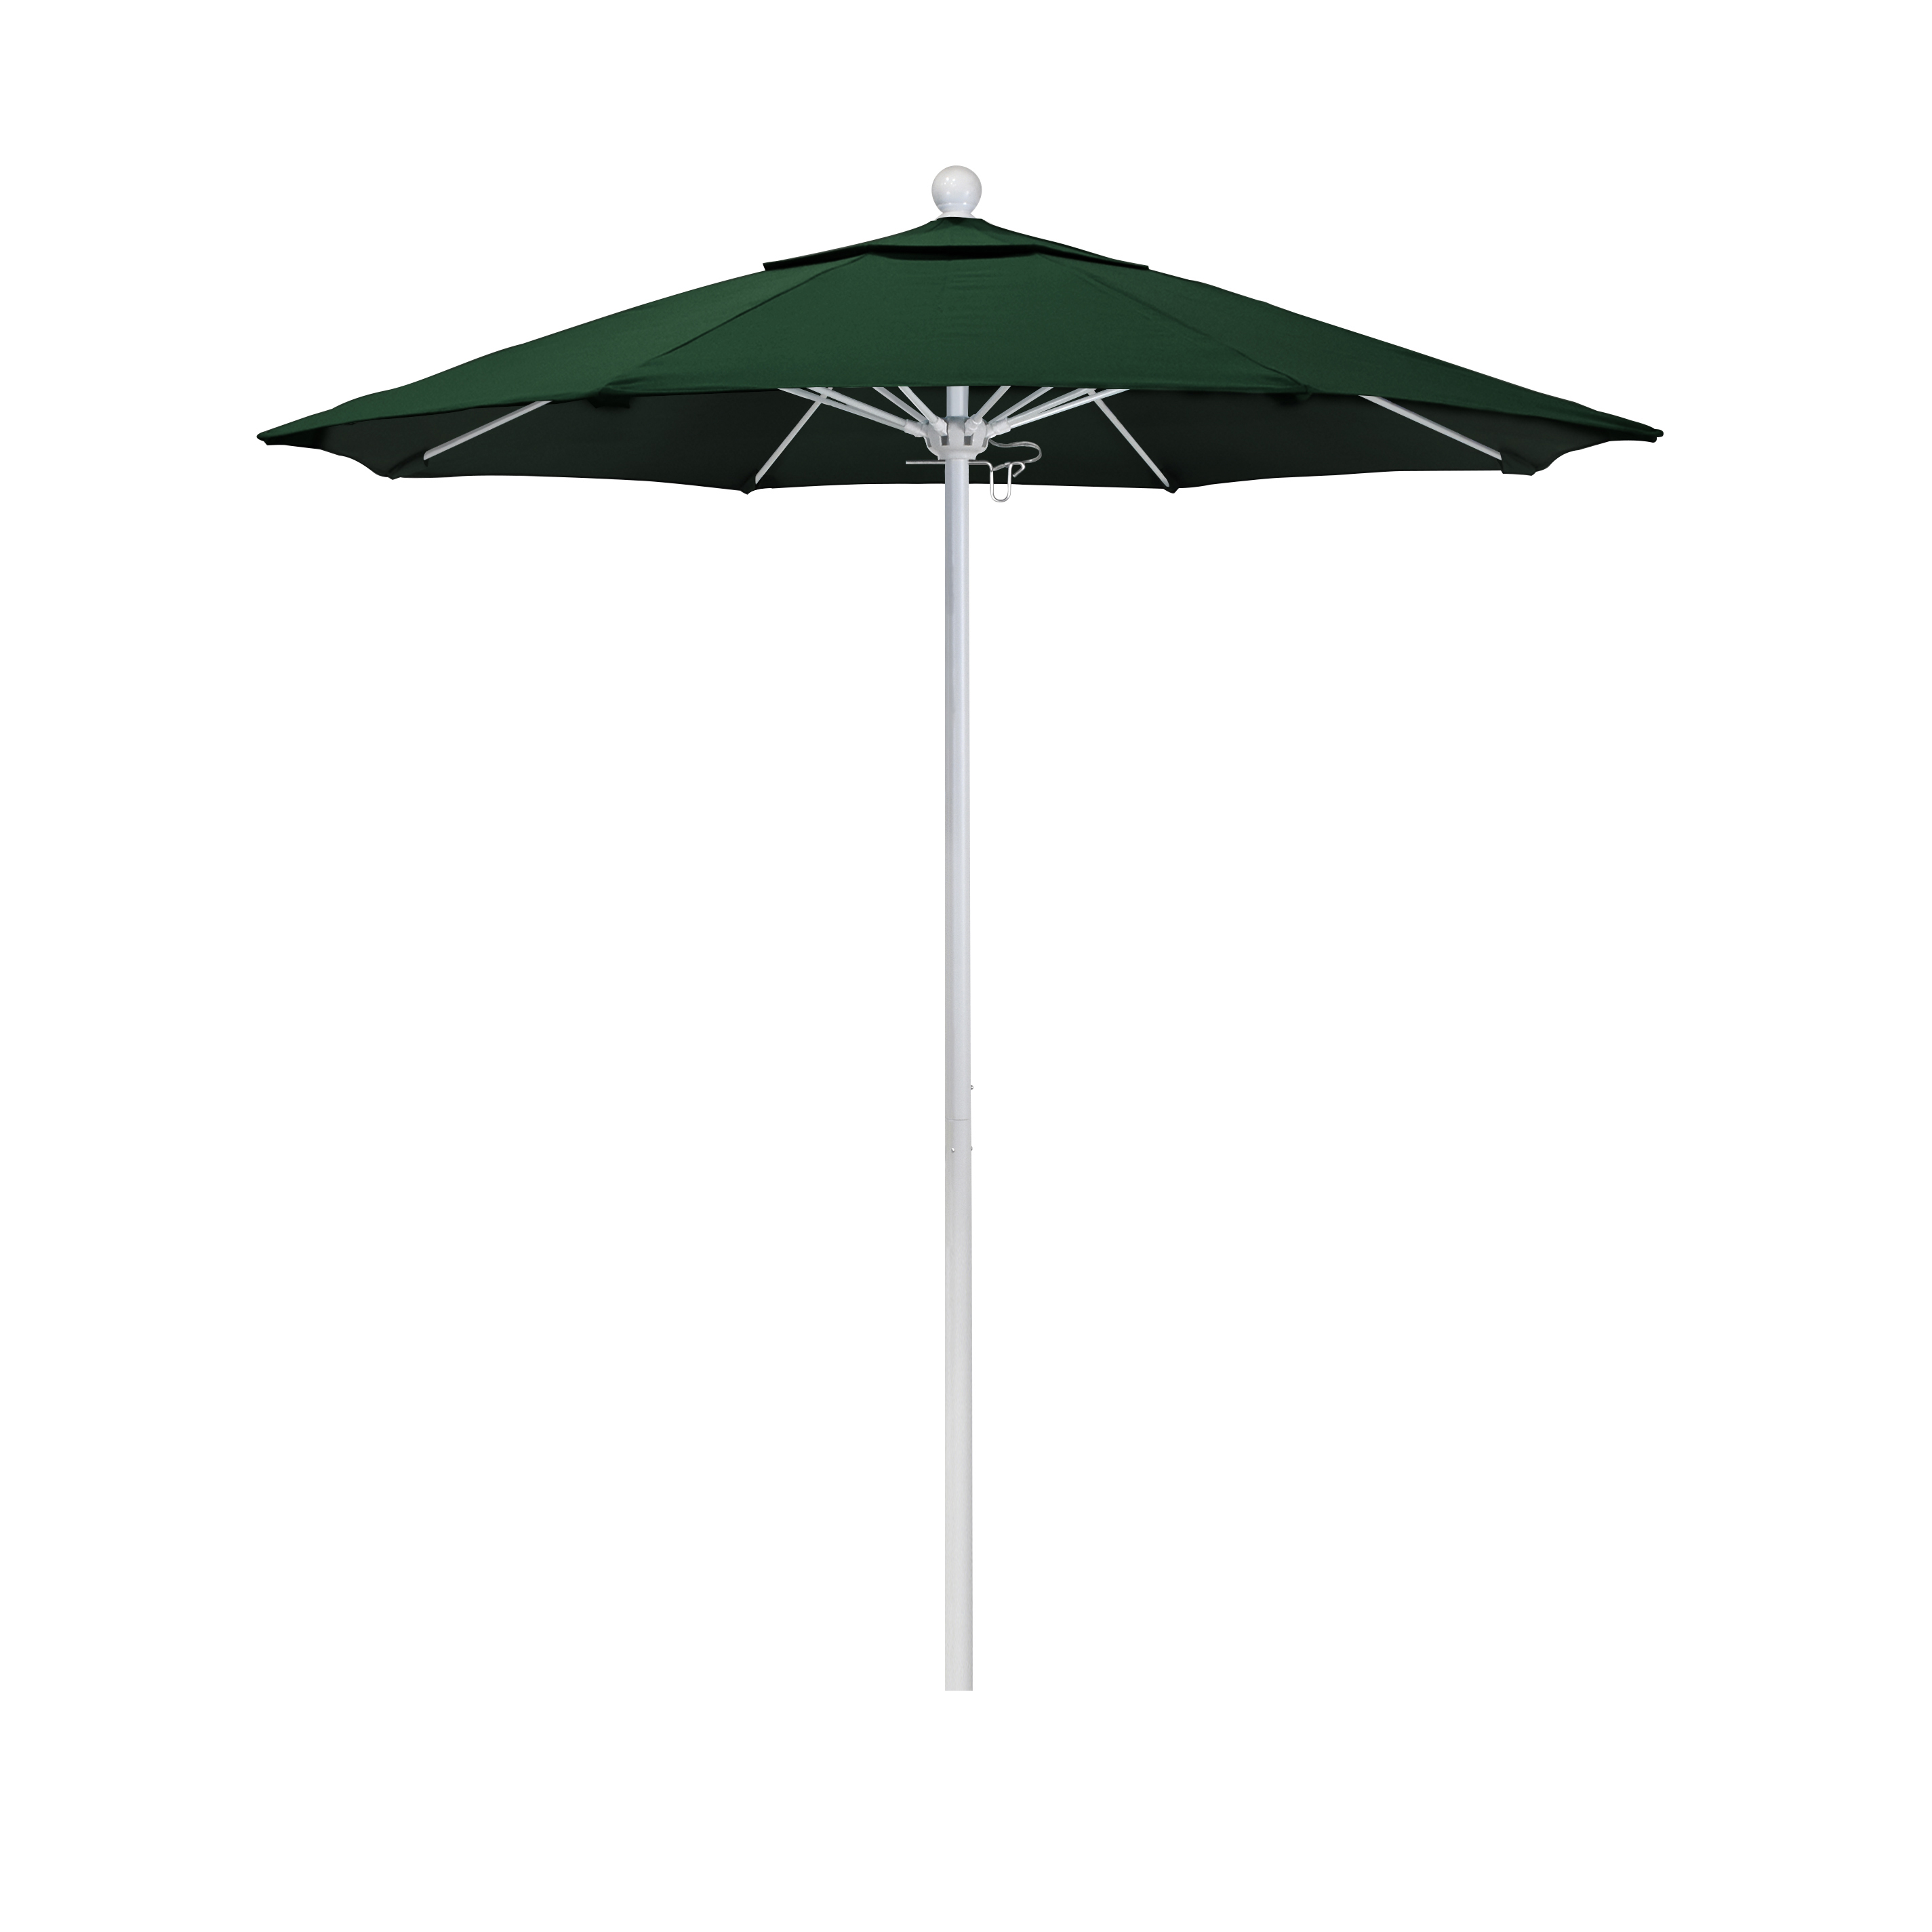 Alto758170-5446 7.5 Ft. Fiberglass Pulley Open Market Umbrella - Matted White And Sunbrella-forest Green